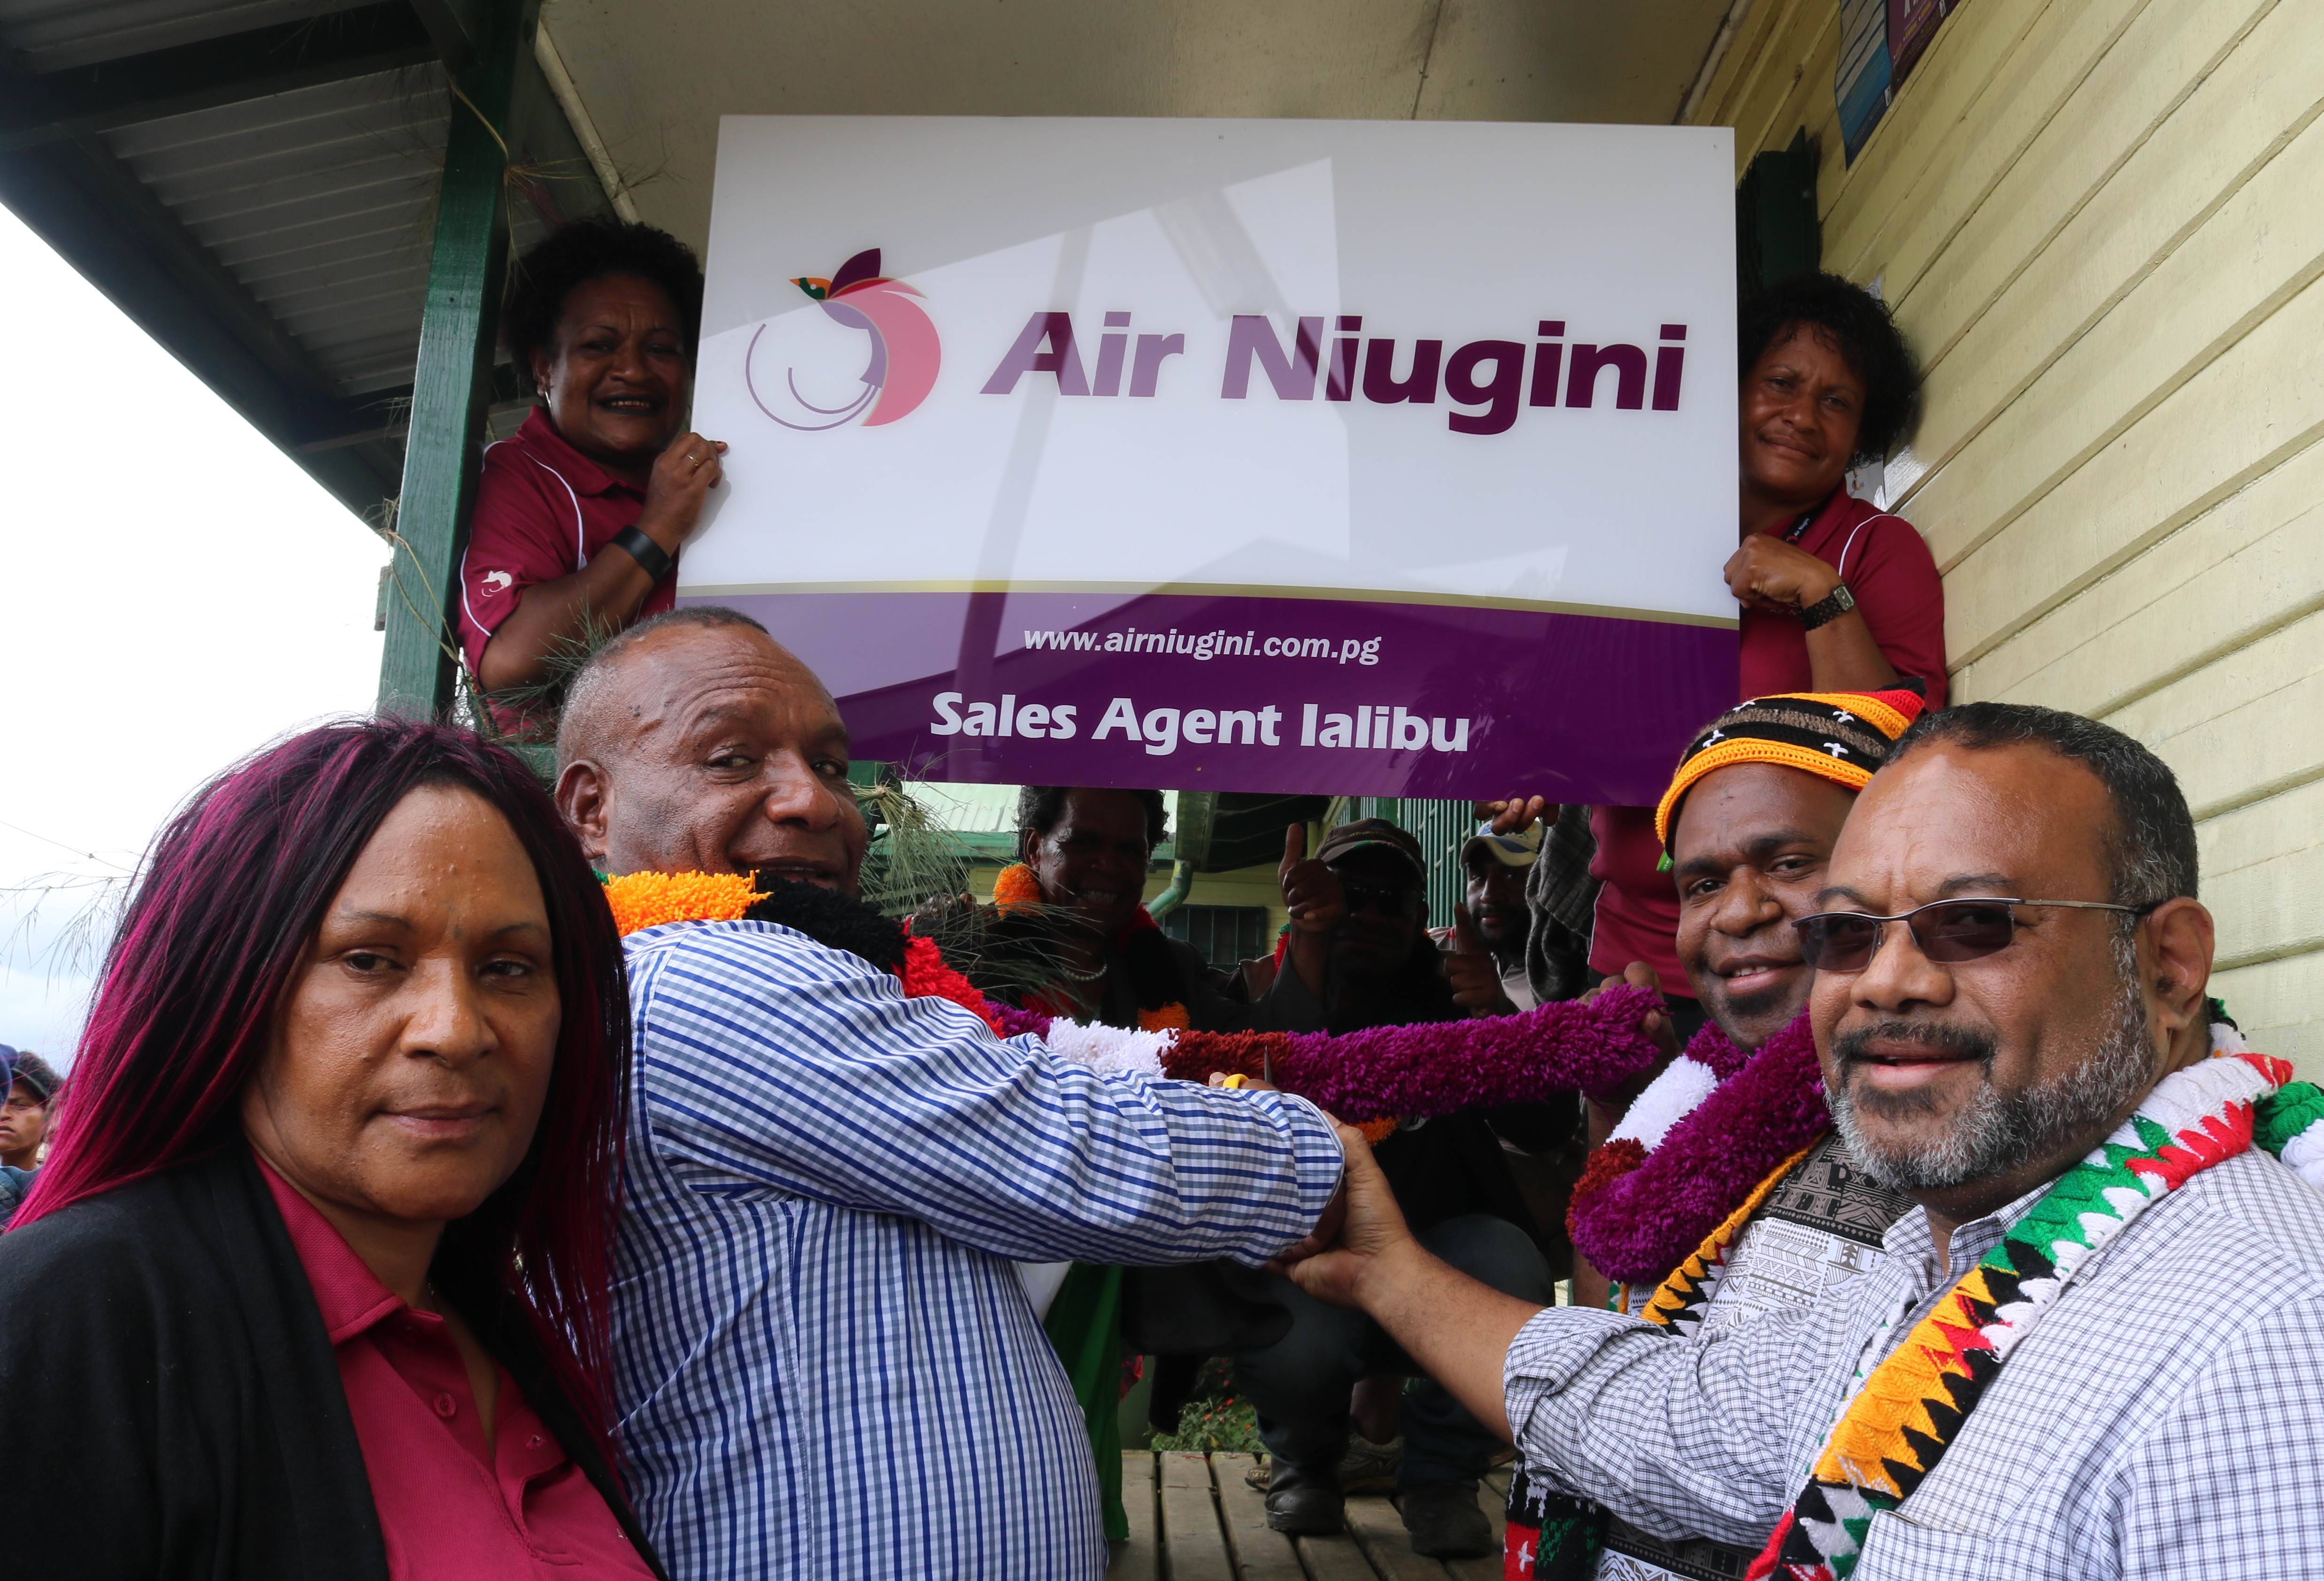 Air Niugini Launches A Rural Sales Agent In Ialibu